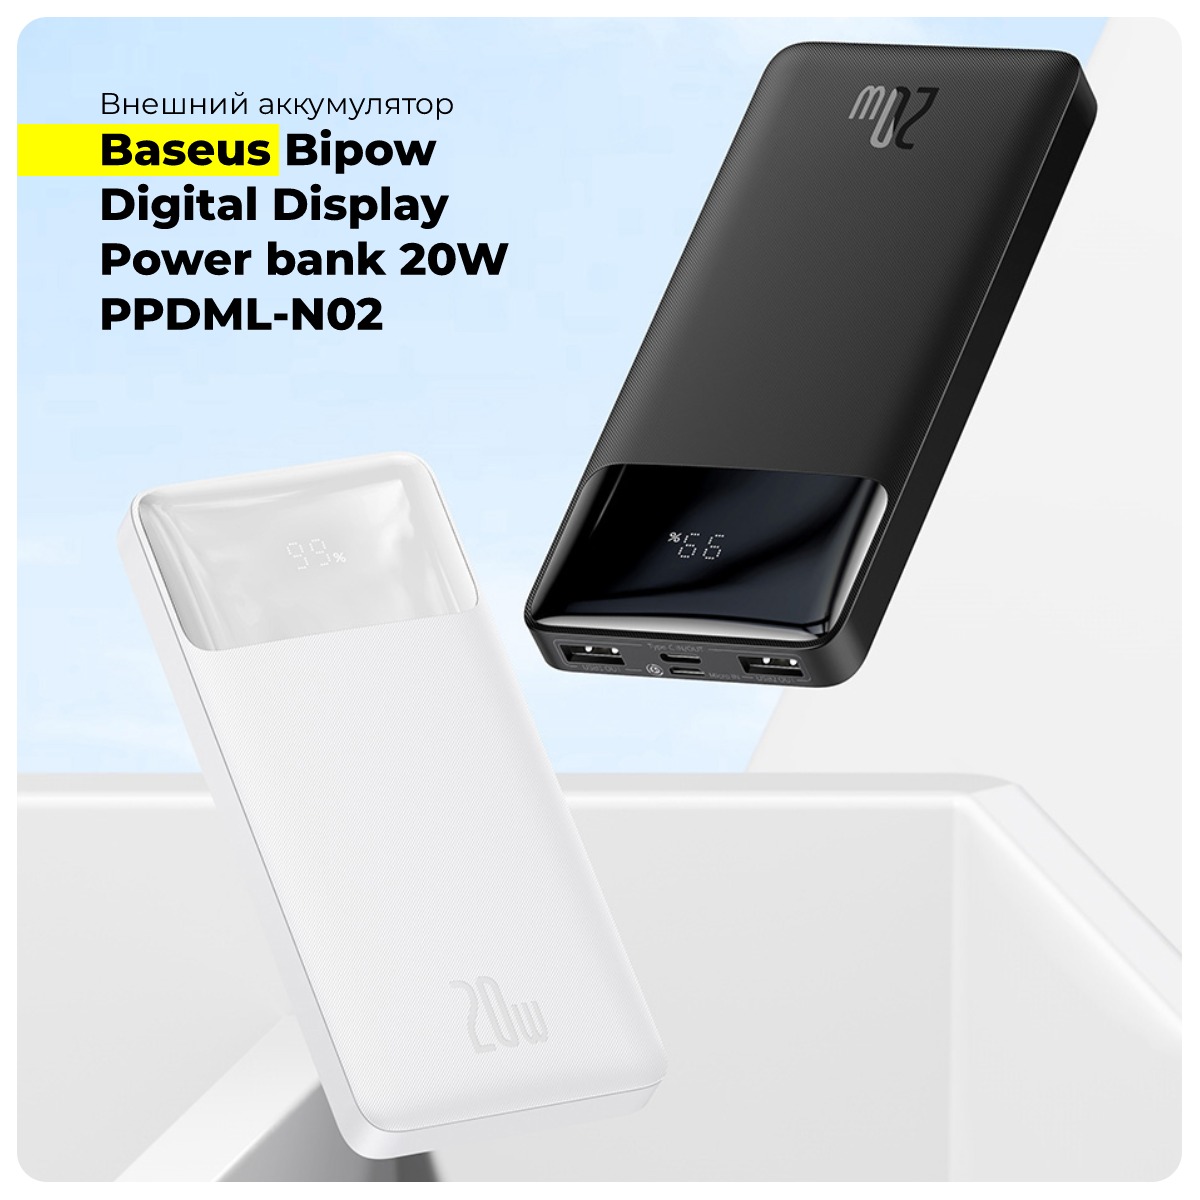 Baseus-Bipow-Digital-Display-PPDML-N02-01